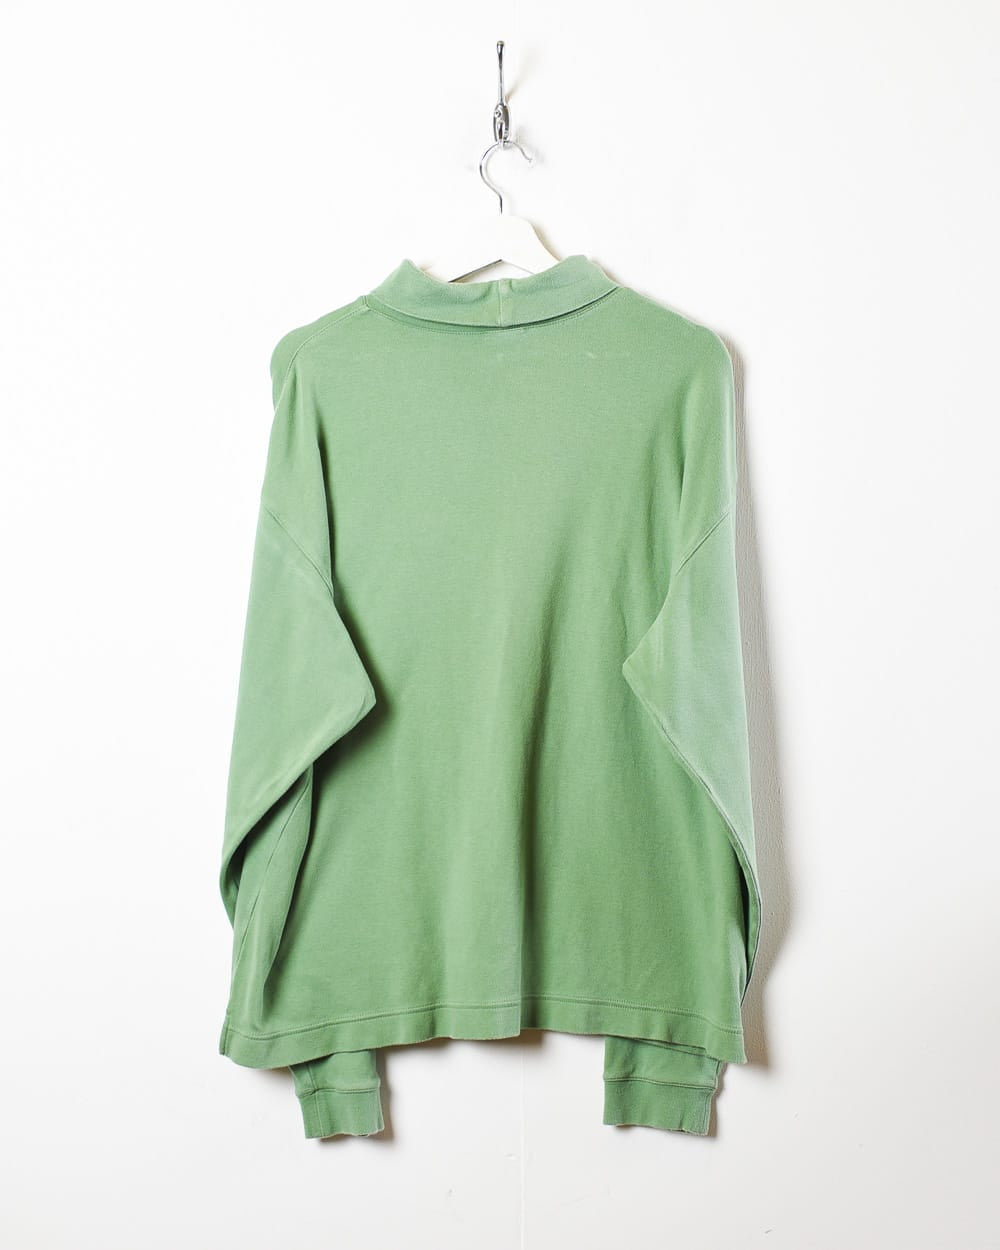 Green Nike Turtle Neck Long Sleeved T-Shirt - Large